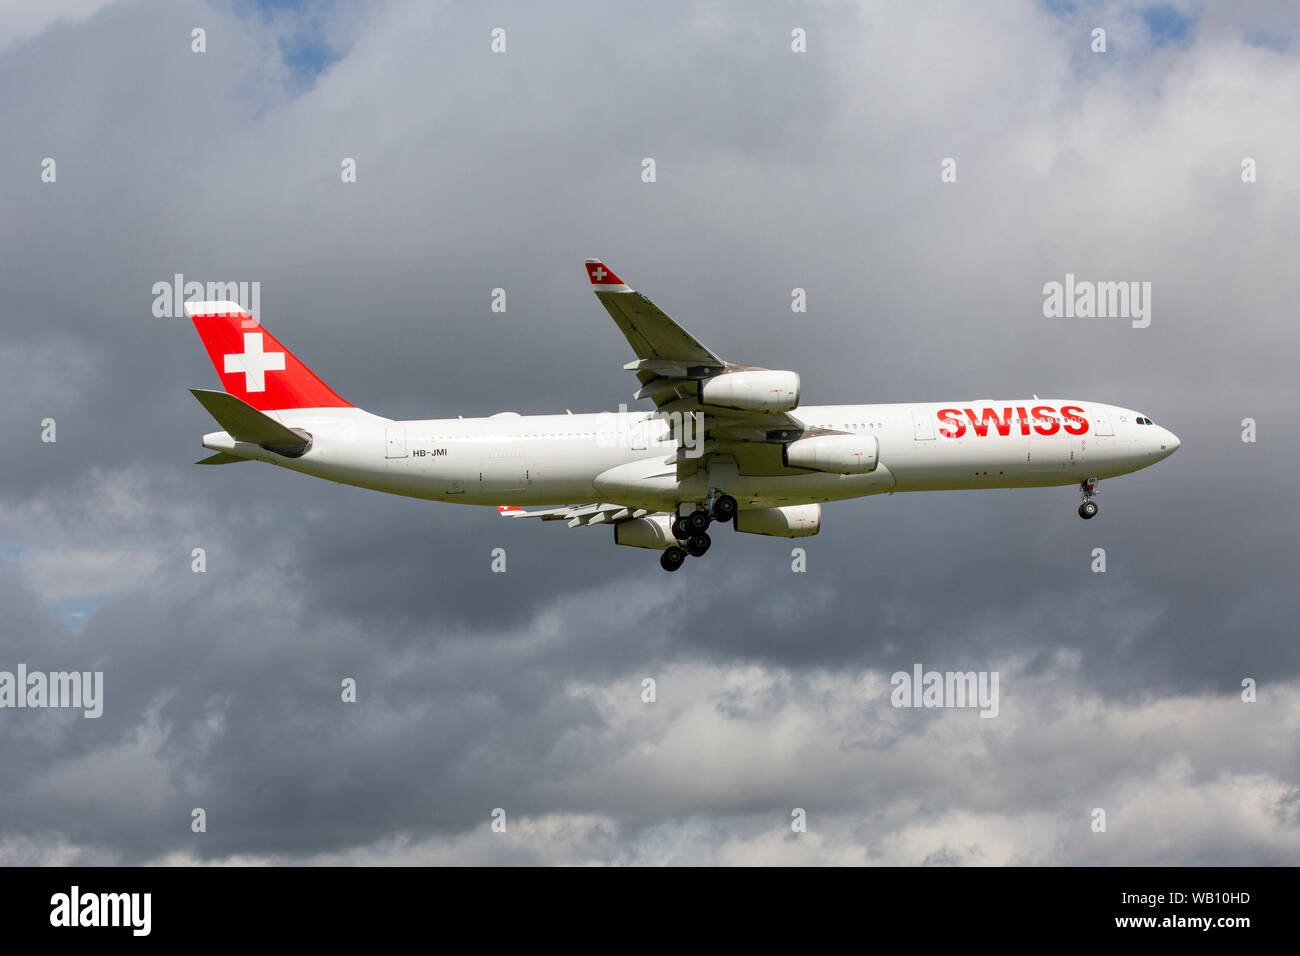 Airbus A340-313X, Reg: HB-JMI beim Anflug zum Flughafen Zürich (ZRH). 15.08.2019 Stock Photo